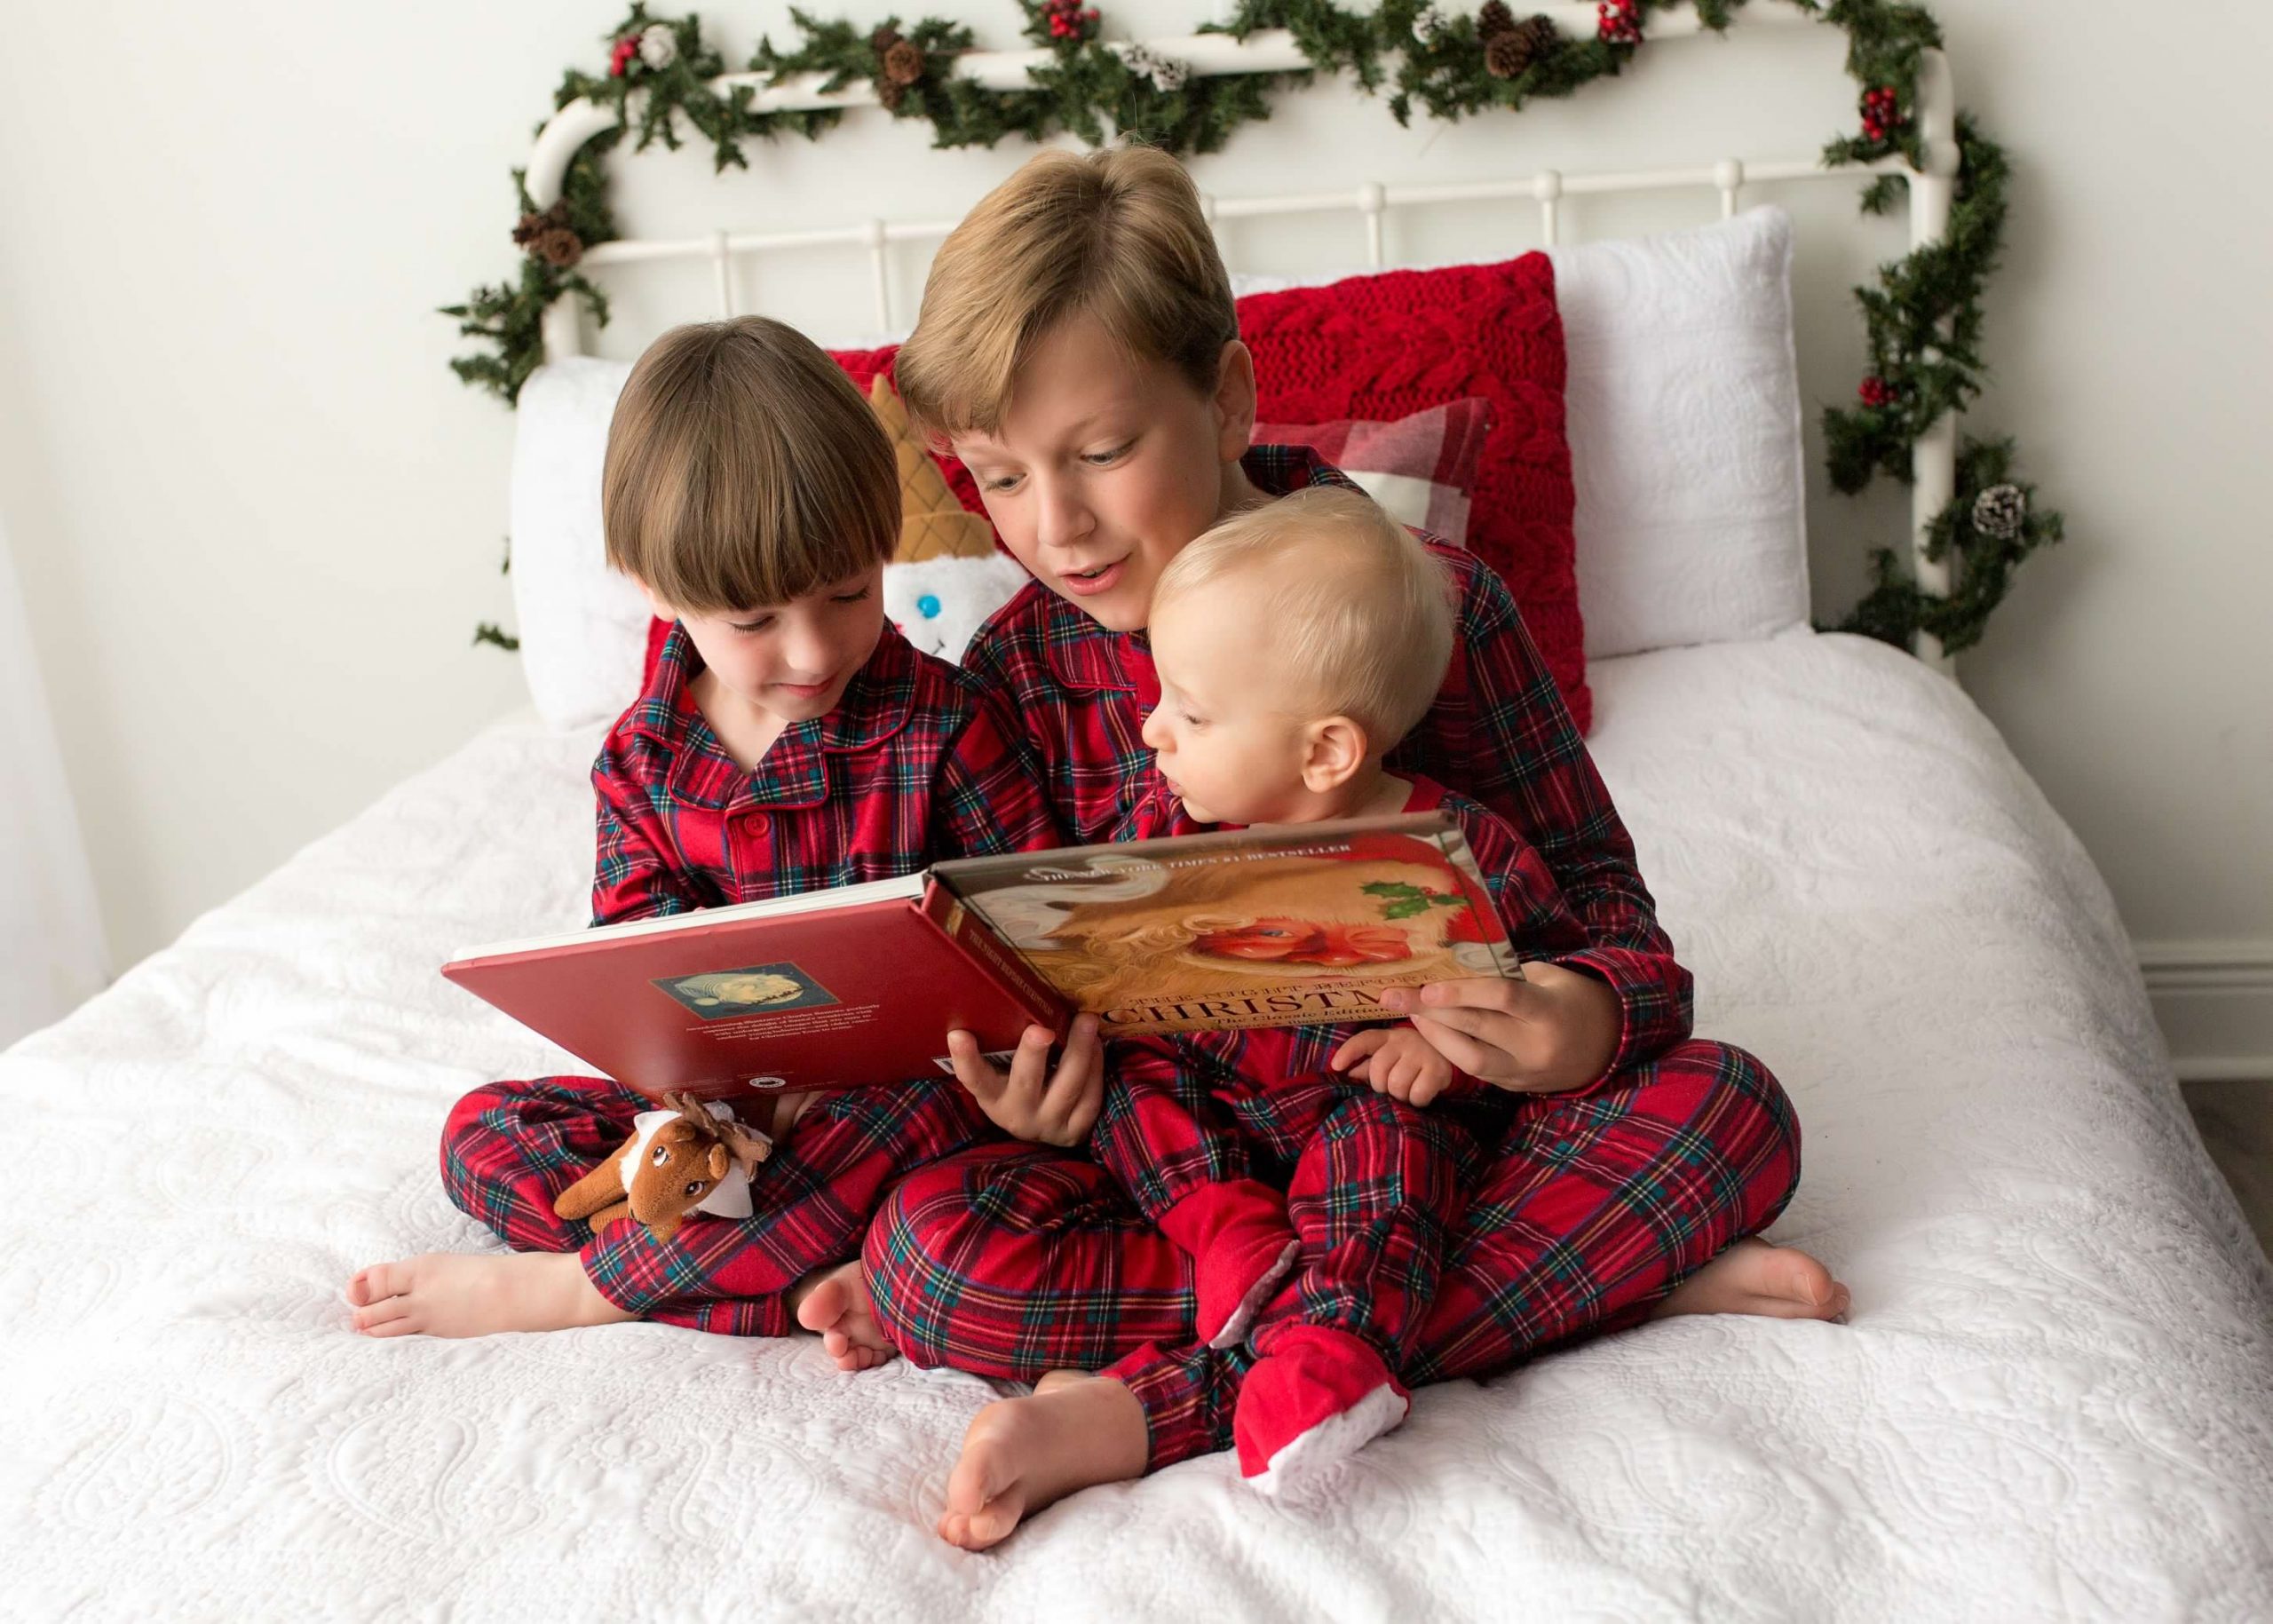 where to buy matching family holiday pajamas